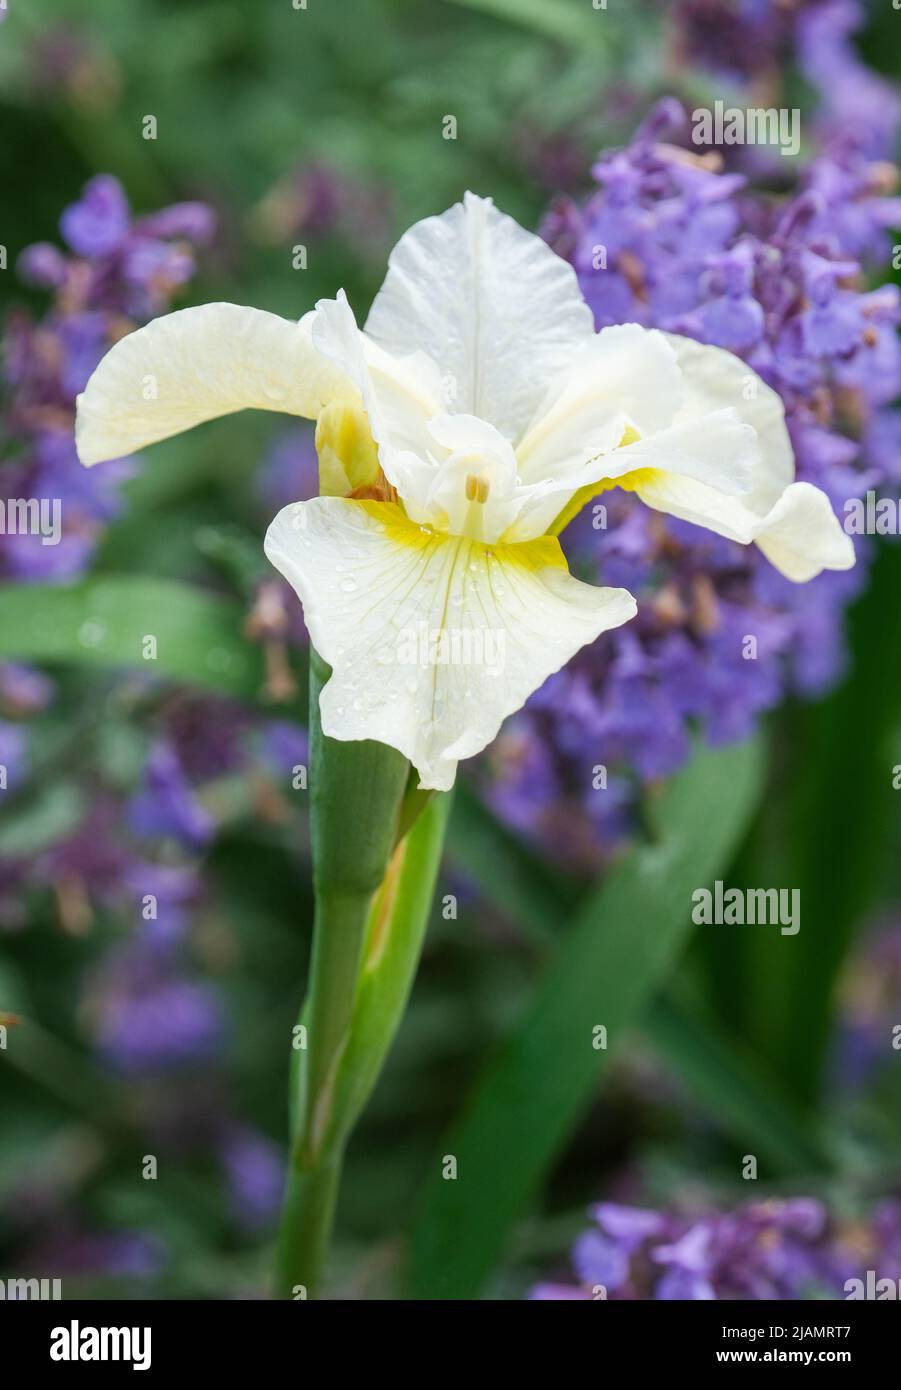 Iris 'White Swirl', Iris Siberiano 'White Swirl', Iris sibirica 'White Swirl. Flores blancas puras con amarillo en la base de las cataratas. Foto de stock